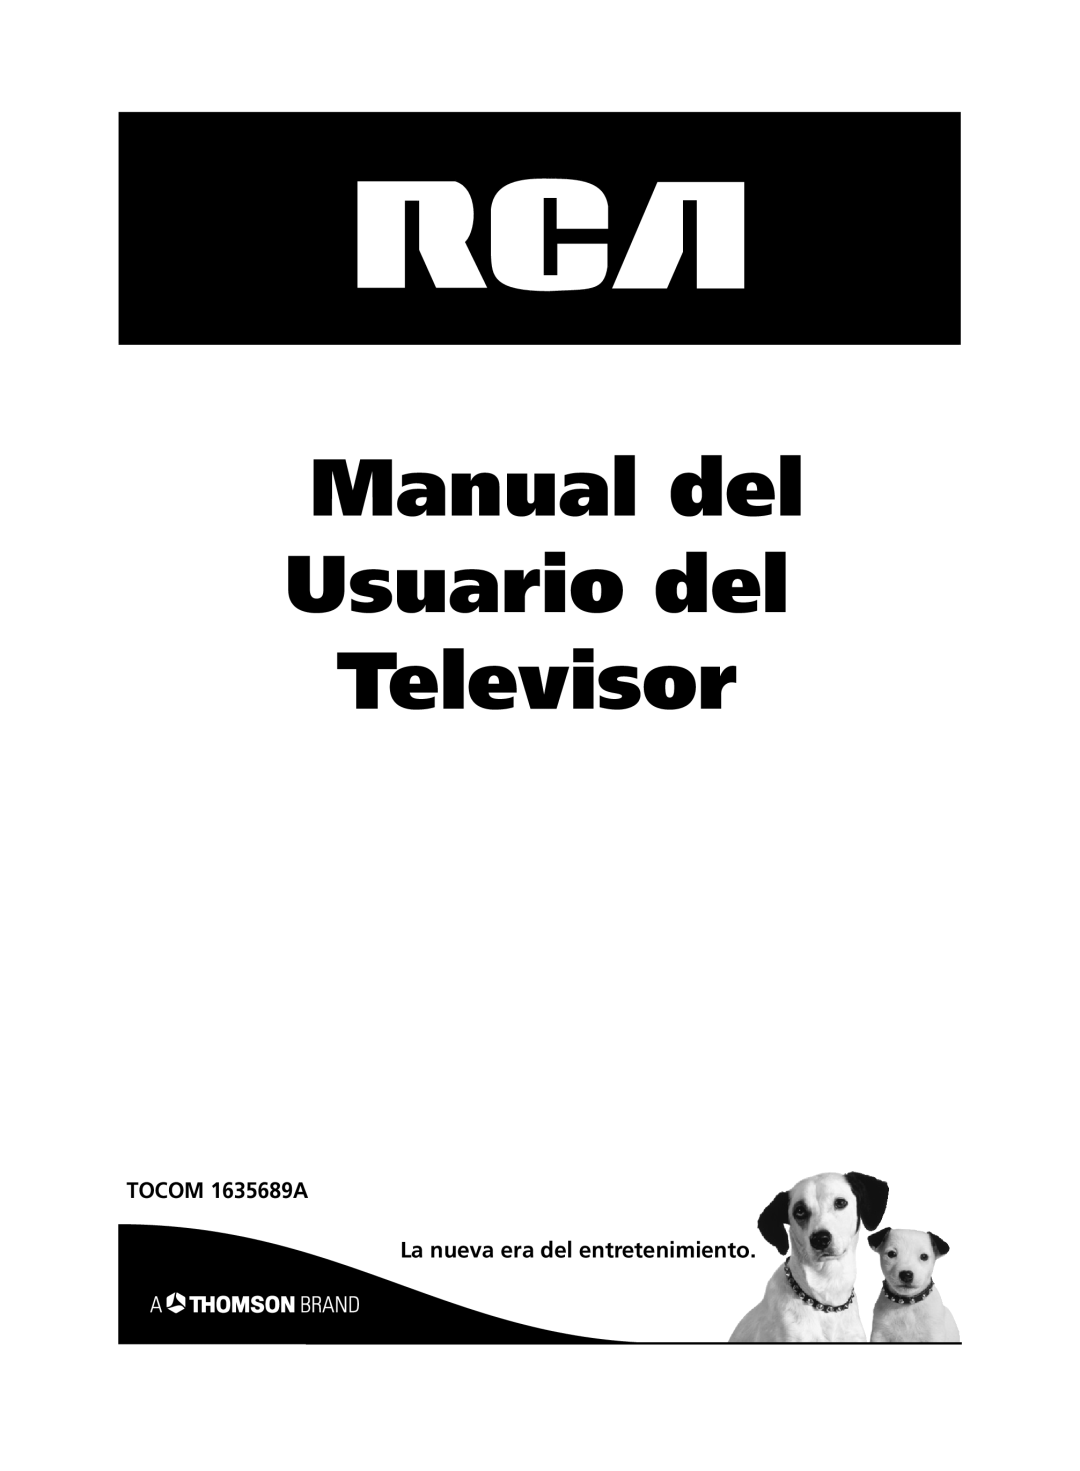 RCA Televison manual TOCOM 1635689A, La nueva era del entretenimiento, Manual del Usuario del Televisor 